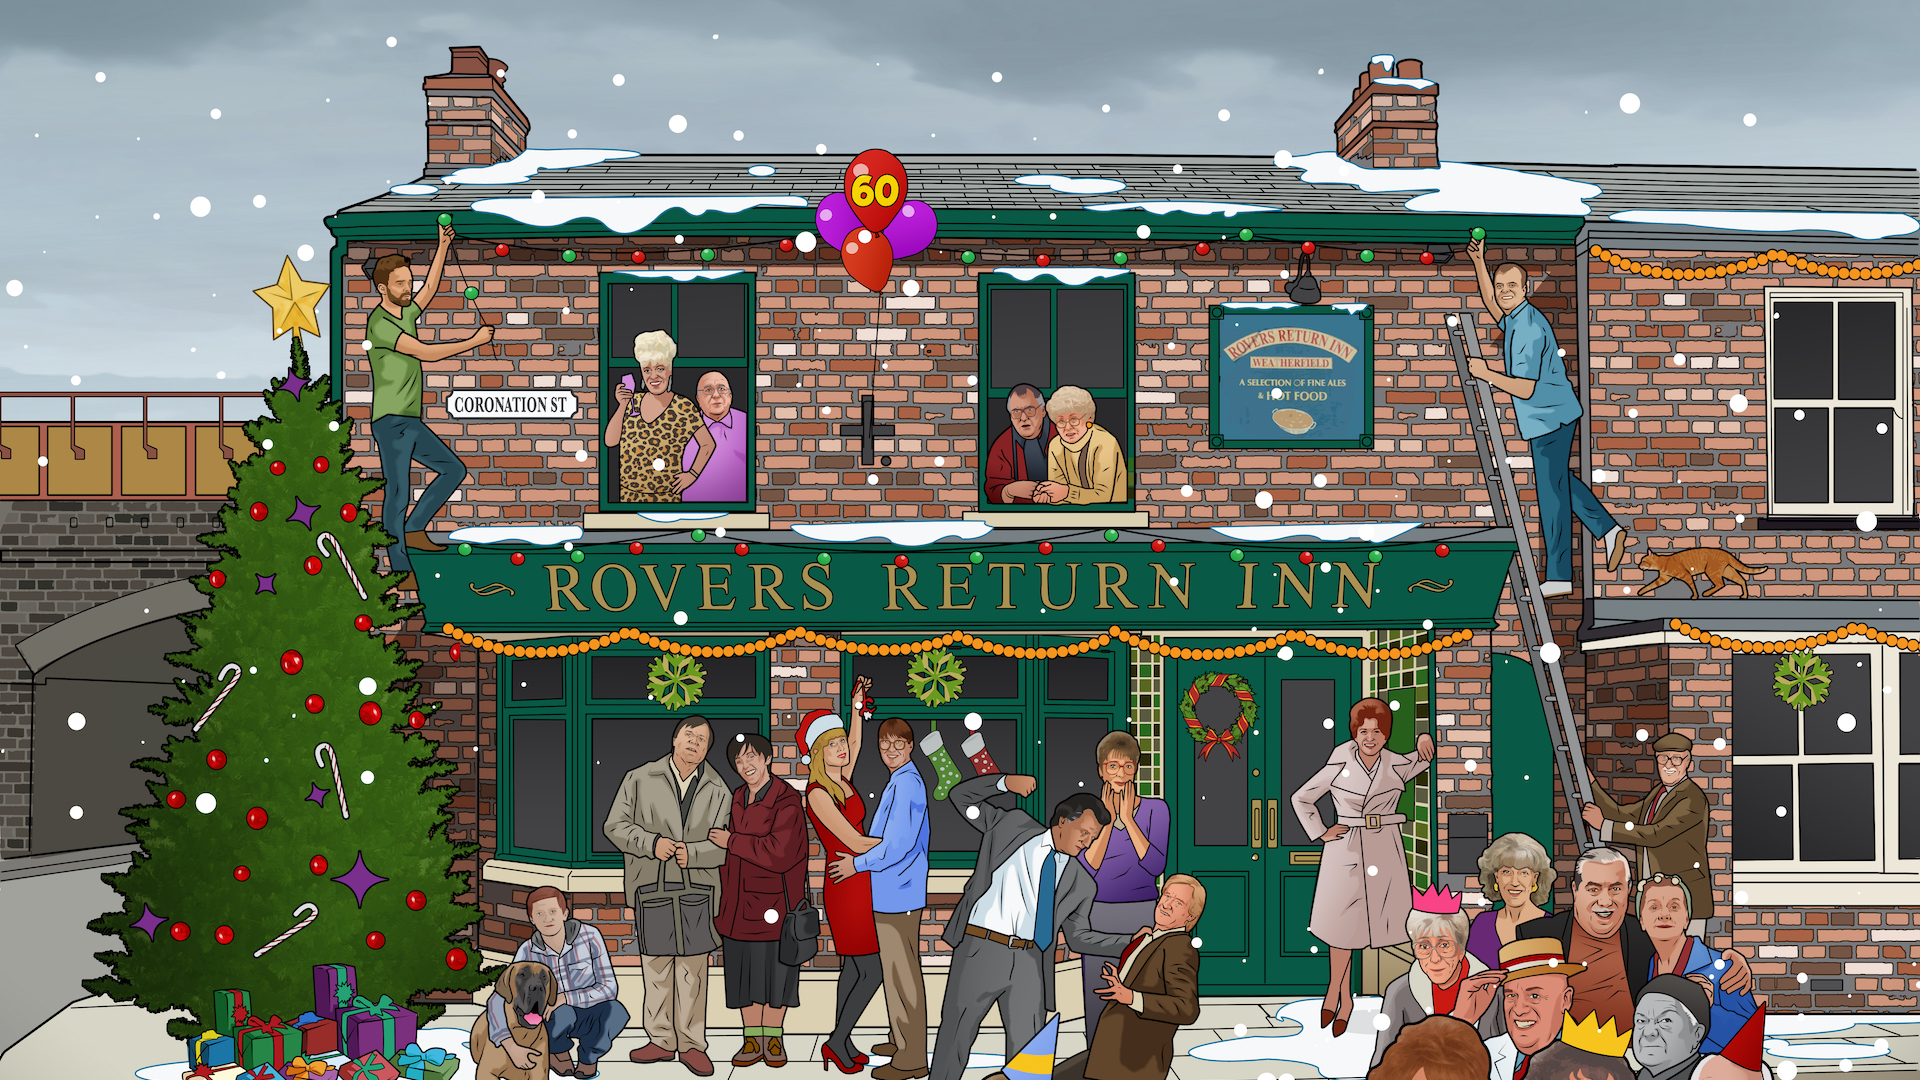 A cartoon of the famous Coronation Street pub the Rovers Return Inn celebrating the 60th anniversary